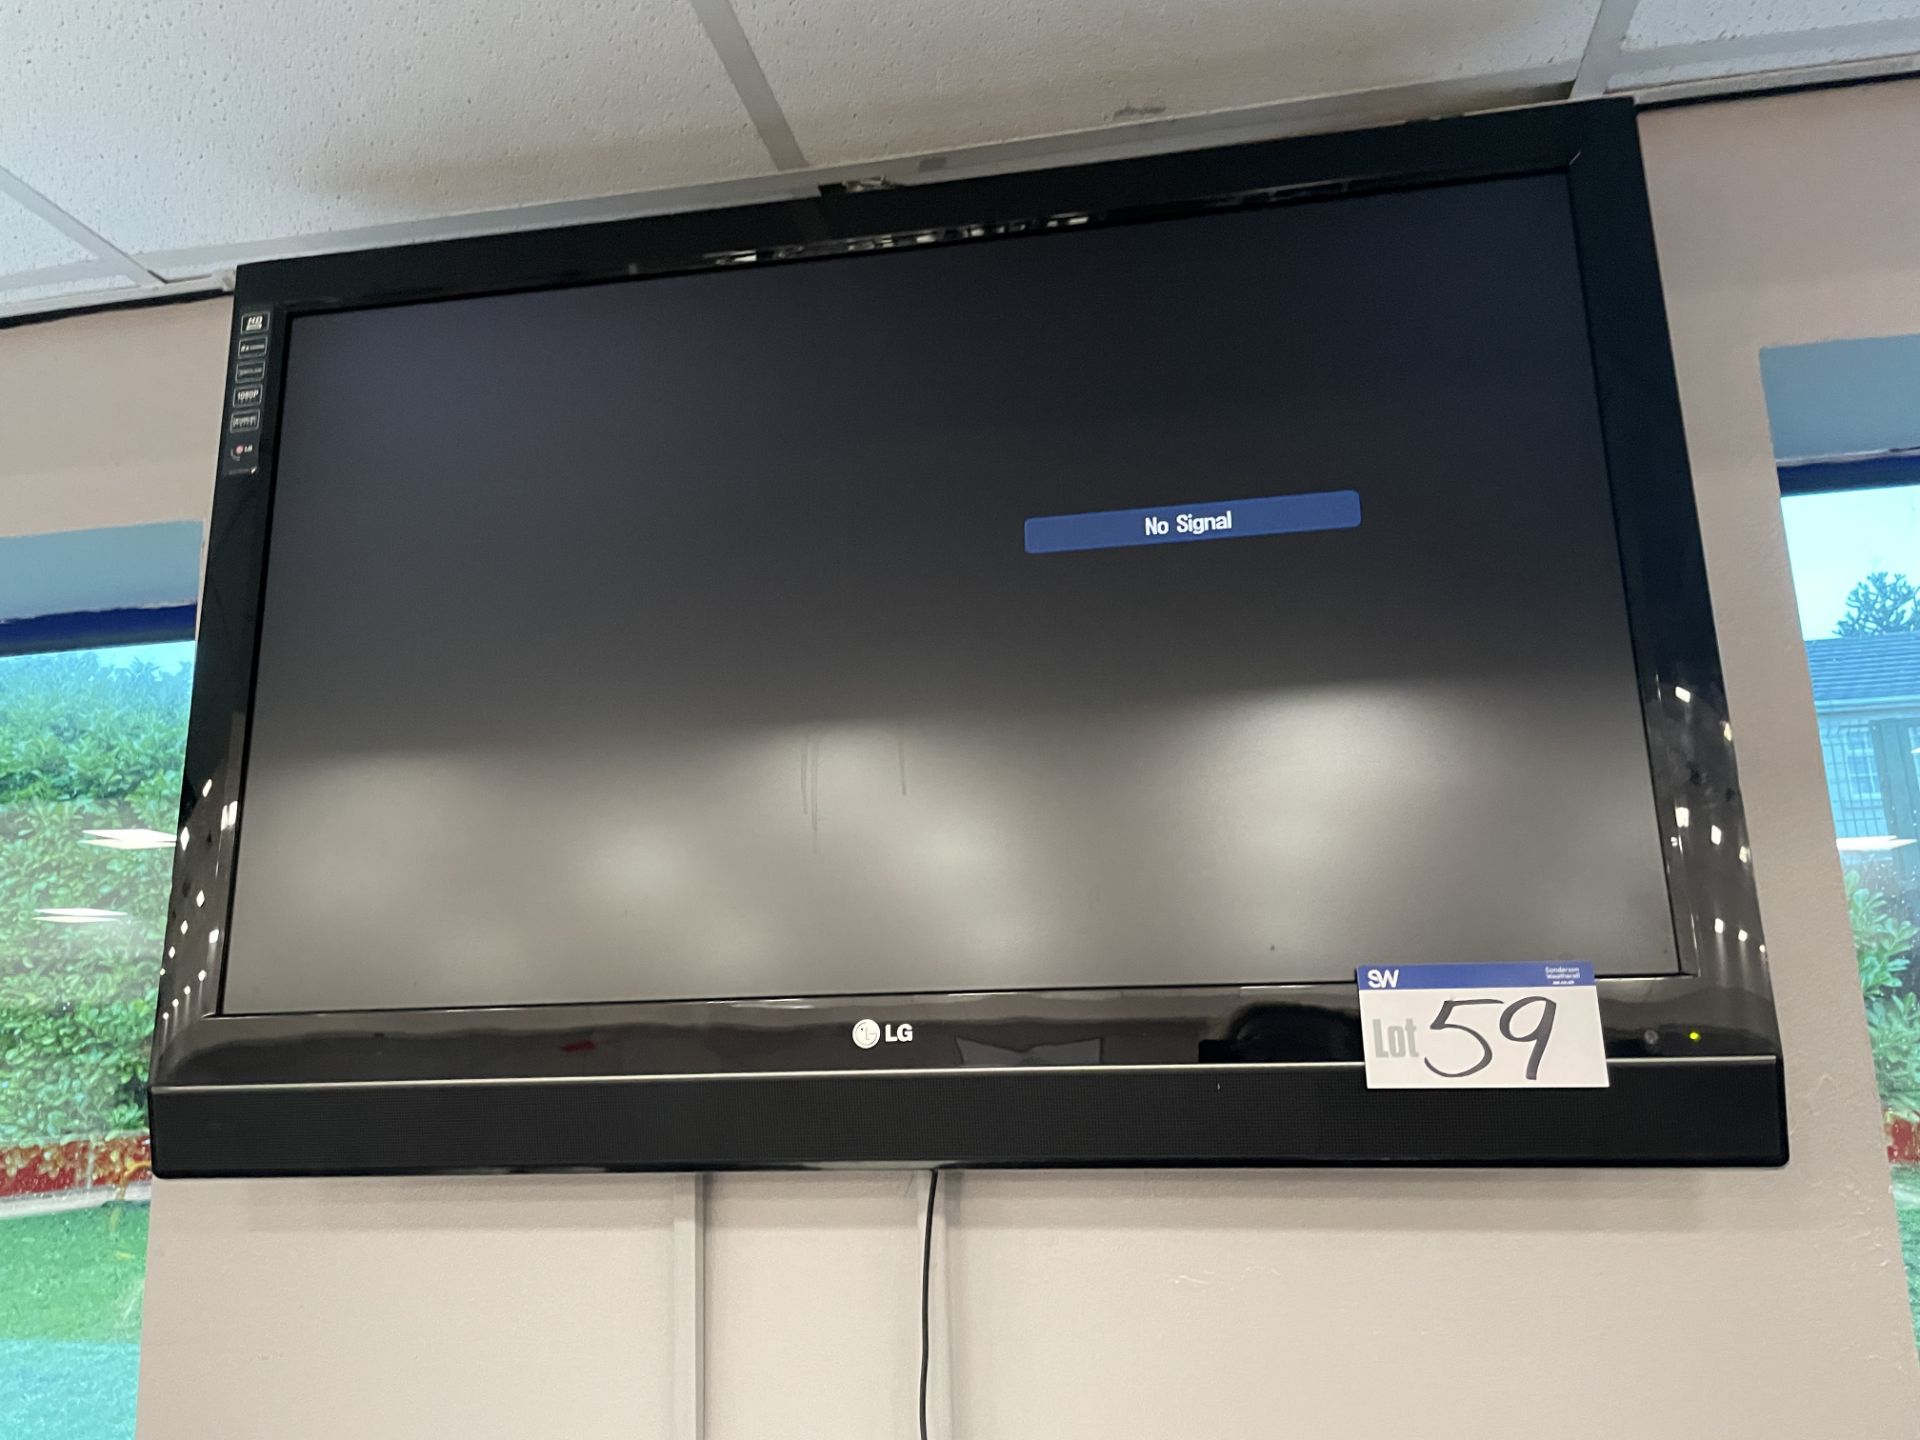 LG 42LC55 Flat Screen Television, serial no. 709WRTF1U213, with wall bracket (no remote control)